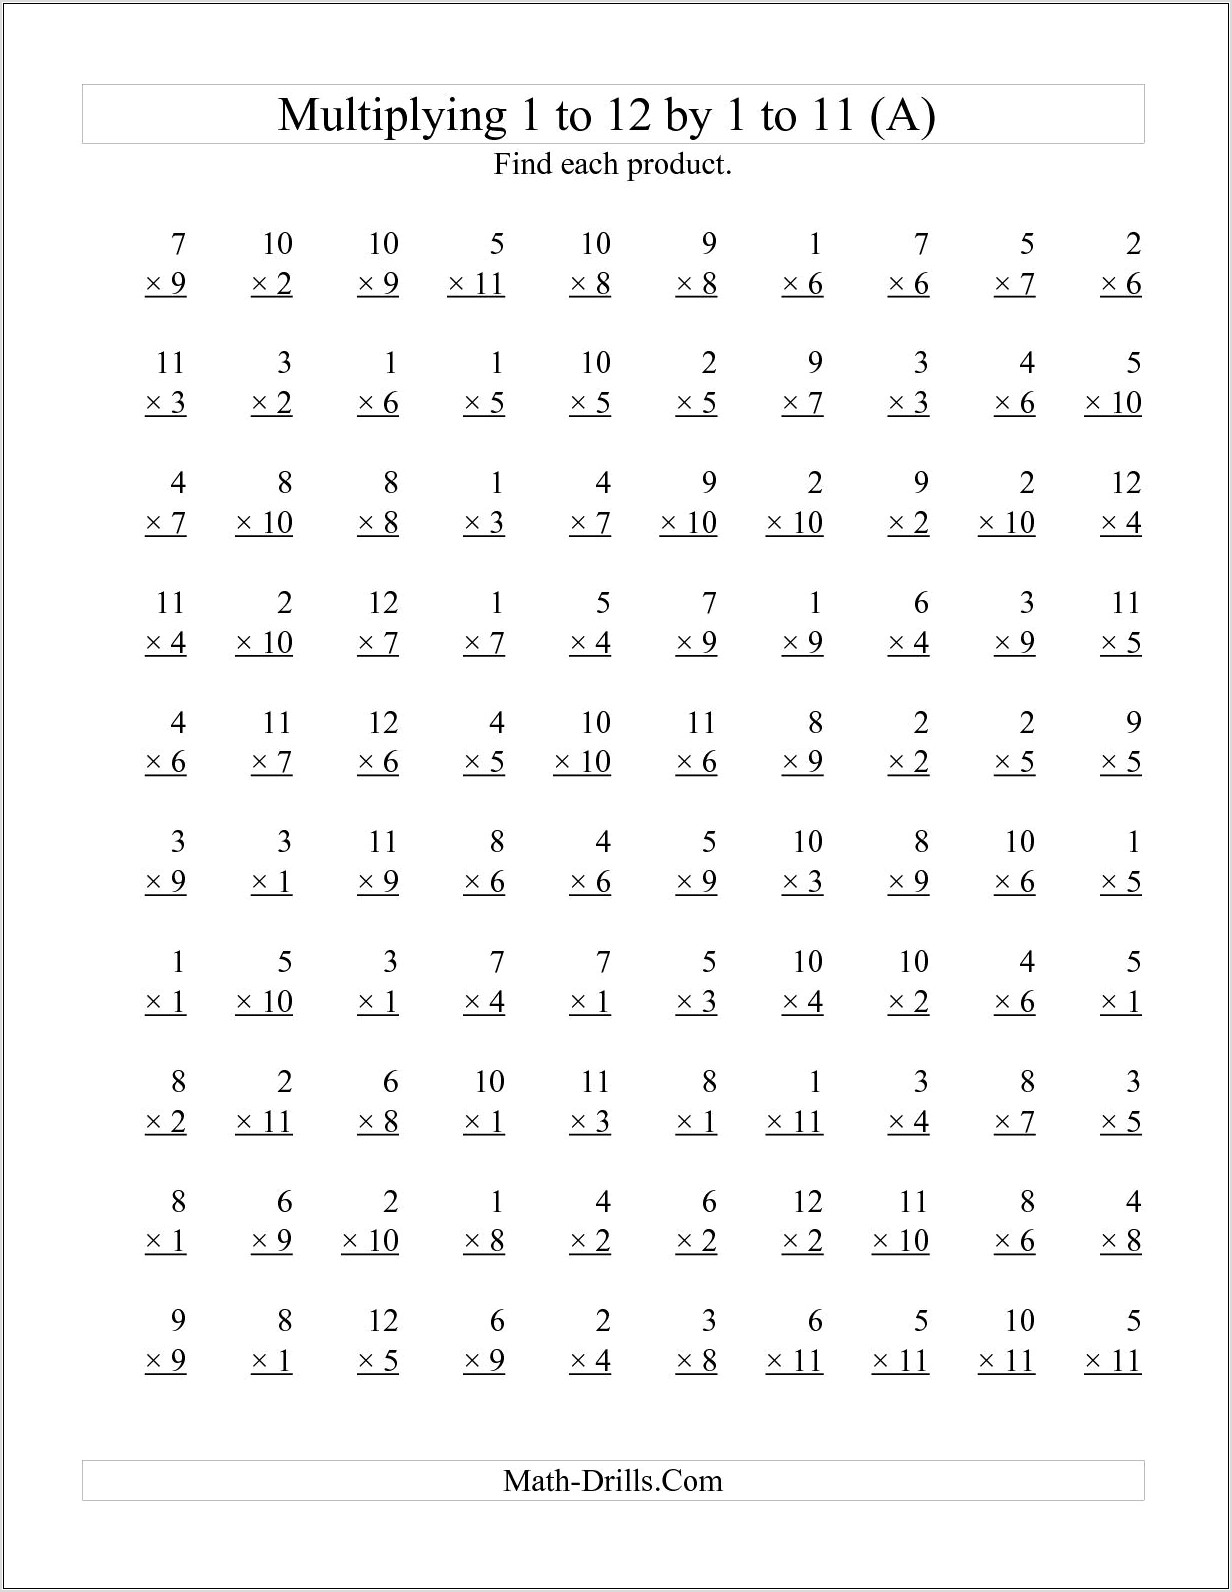 Times 2 Multiplication Worksheet